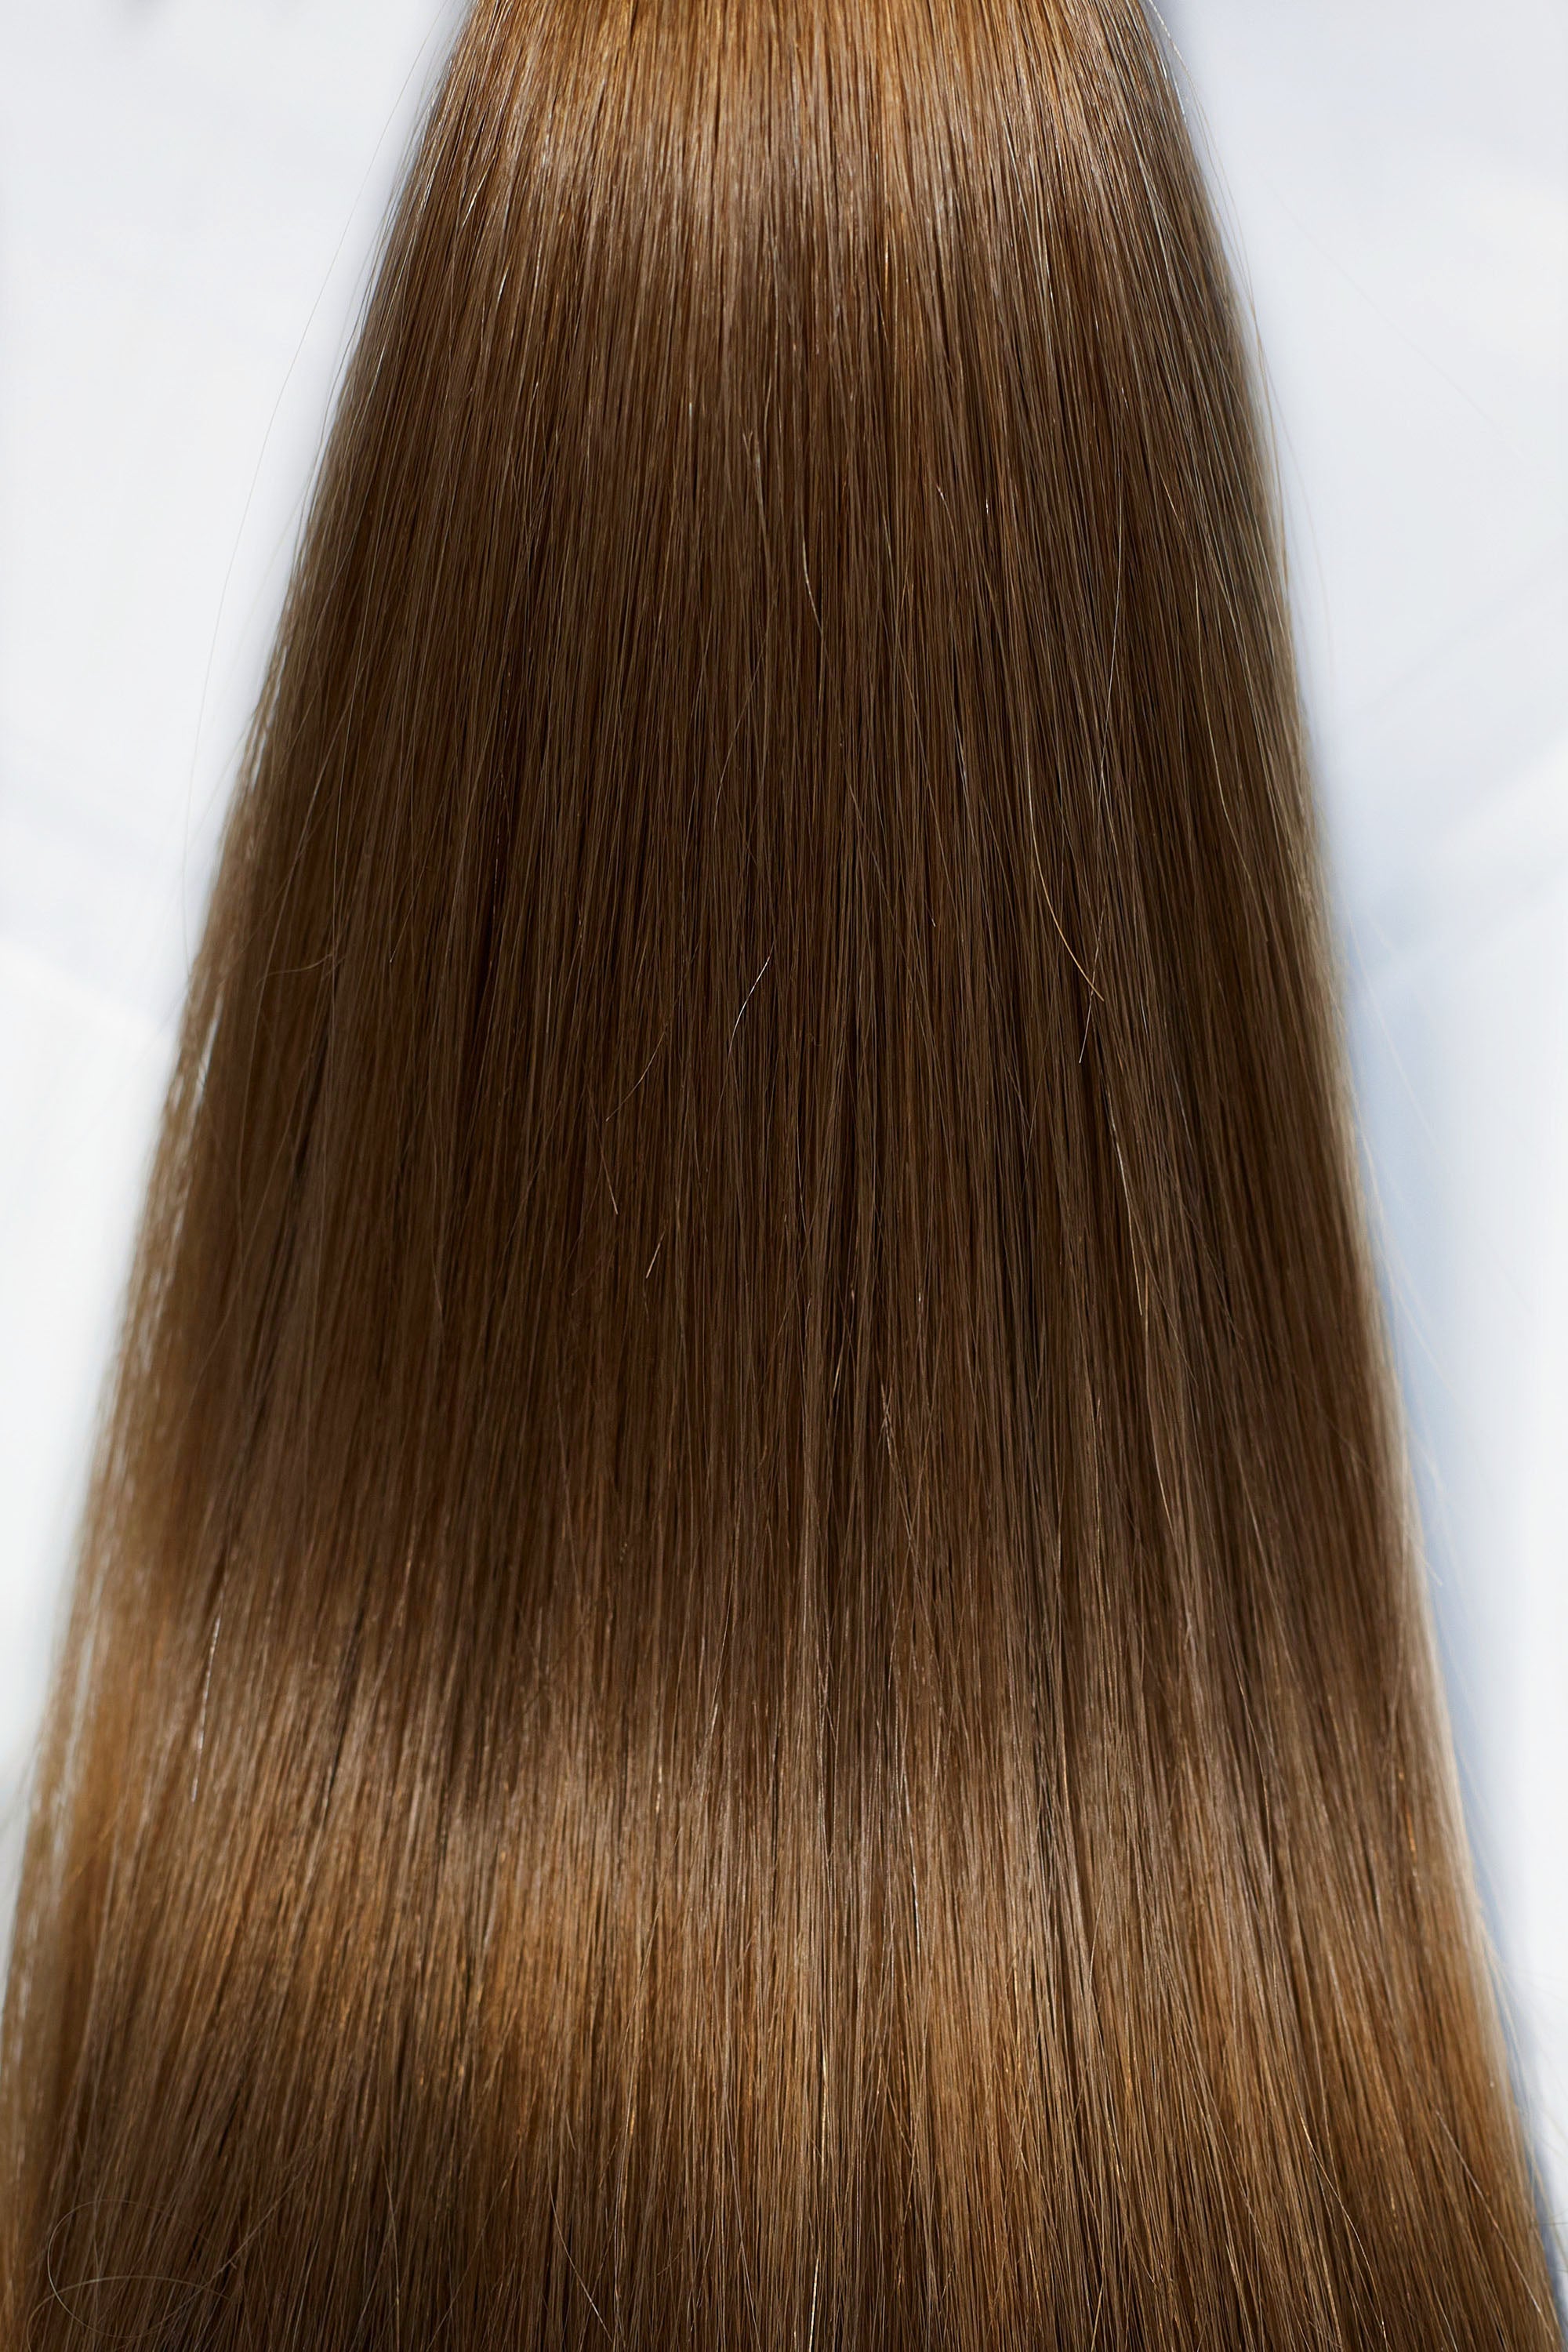 Behair professional Keratin Tip "Premium" 28" (70cm) Natural Straight Chestnut #6 - 25g (Standart - 0.7g each pcs) hair extensions